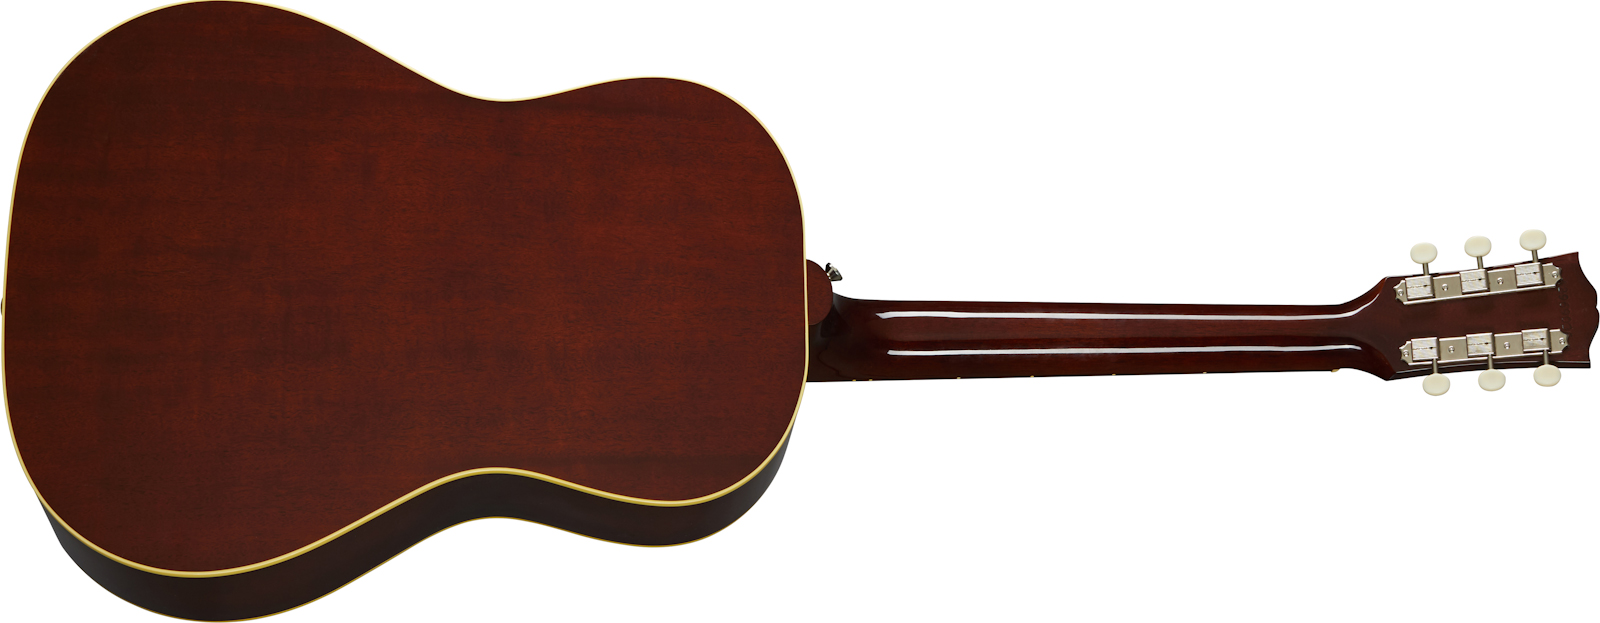 Gibson 50s Lg-2 2020 Auditorium Epicea Acajou Rw - Vintage Sunburst - Elektroakustische Gitarre - Variation 1